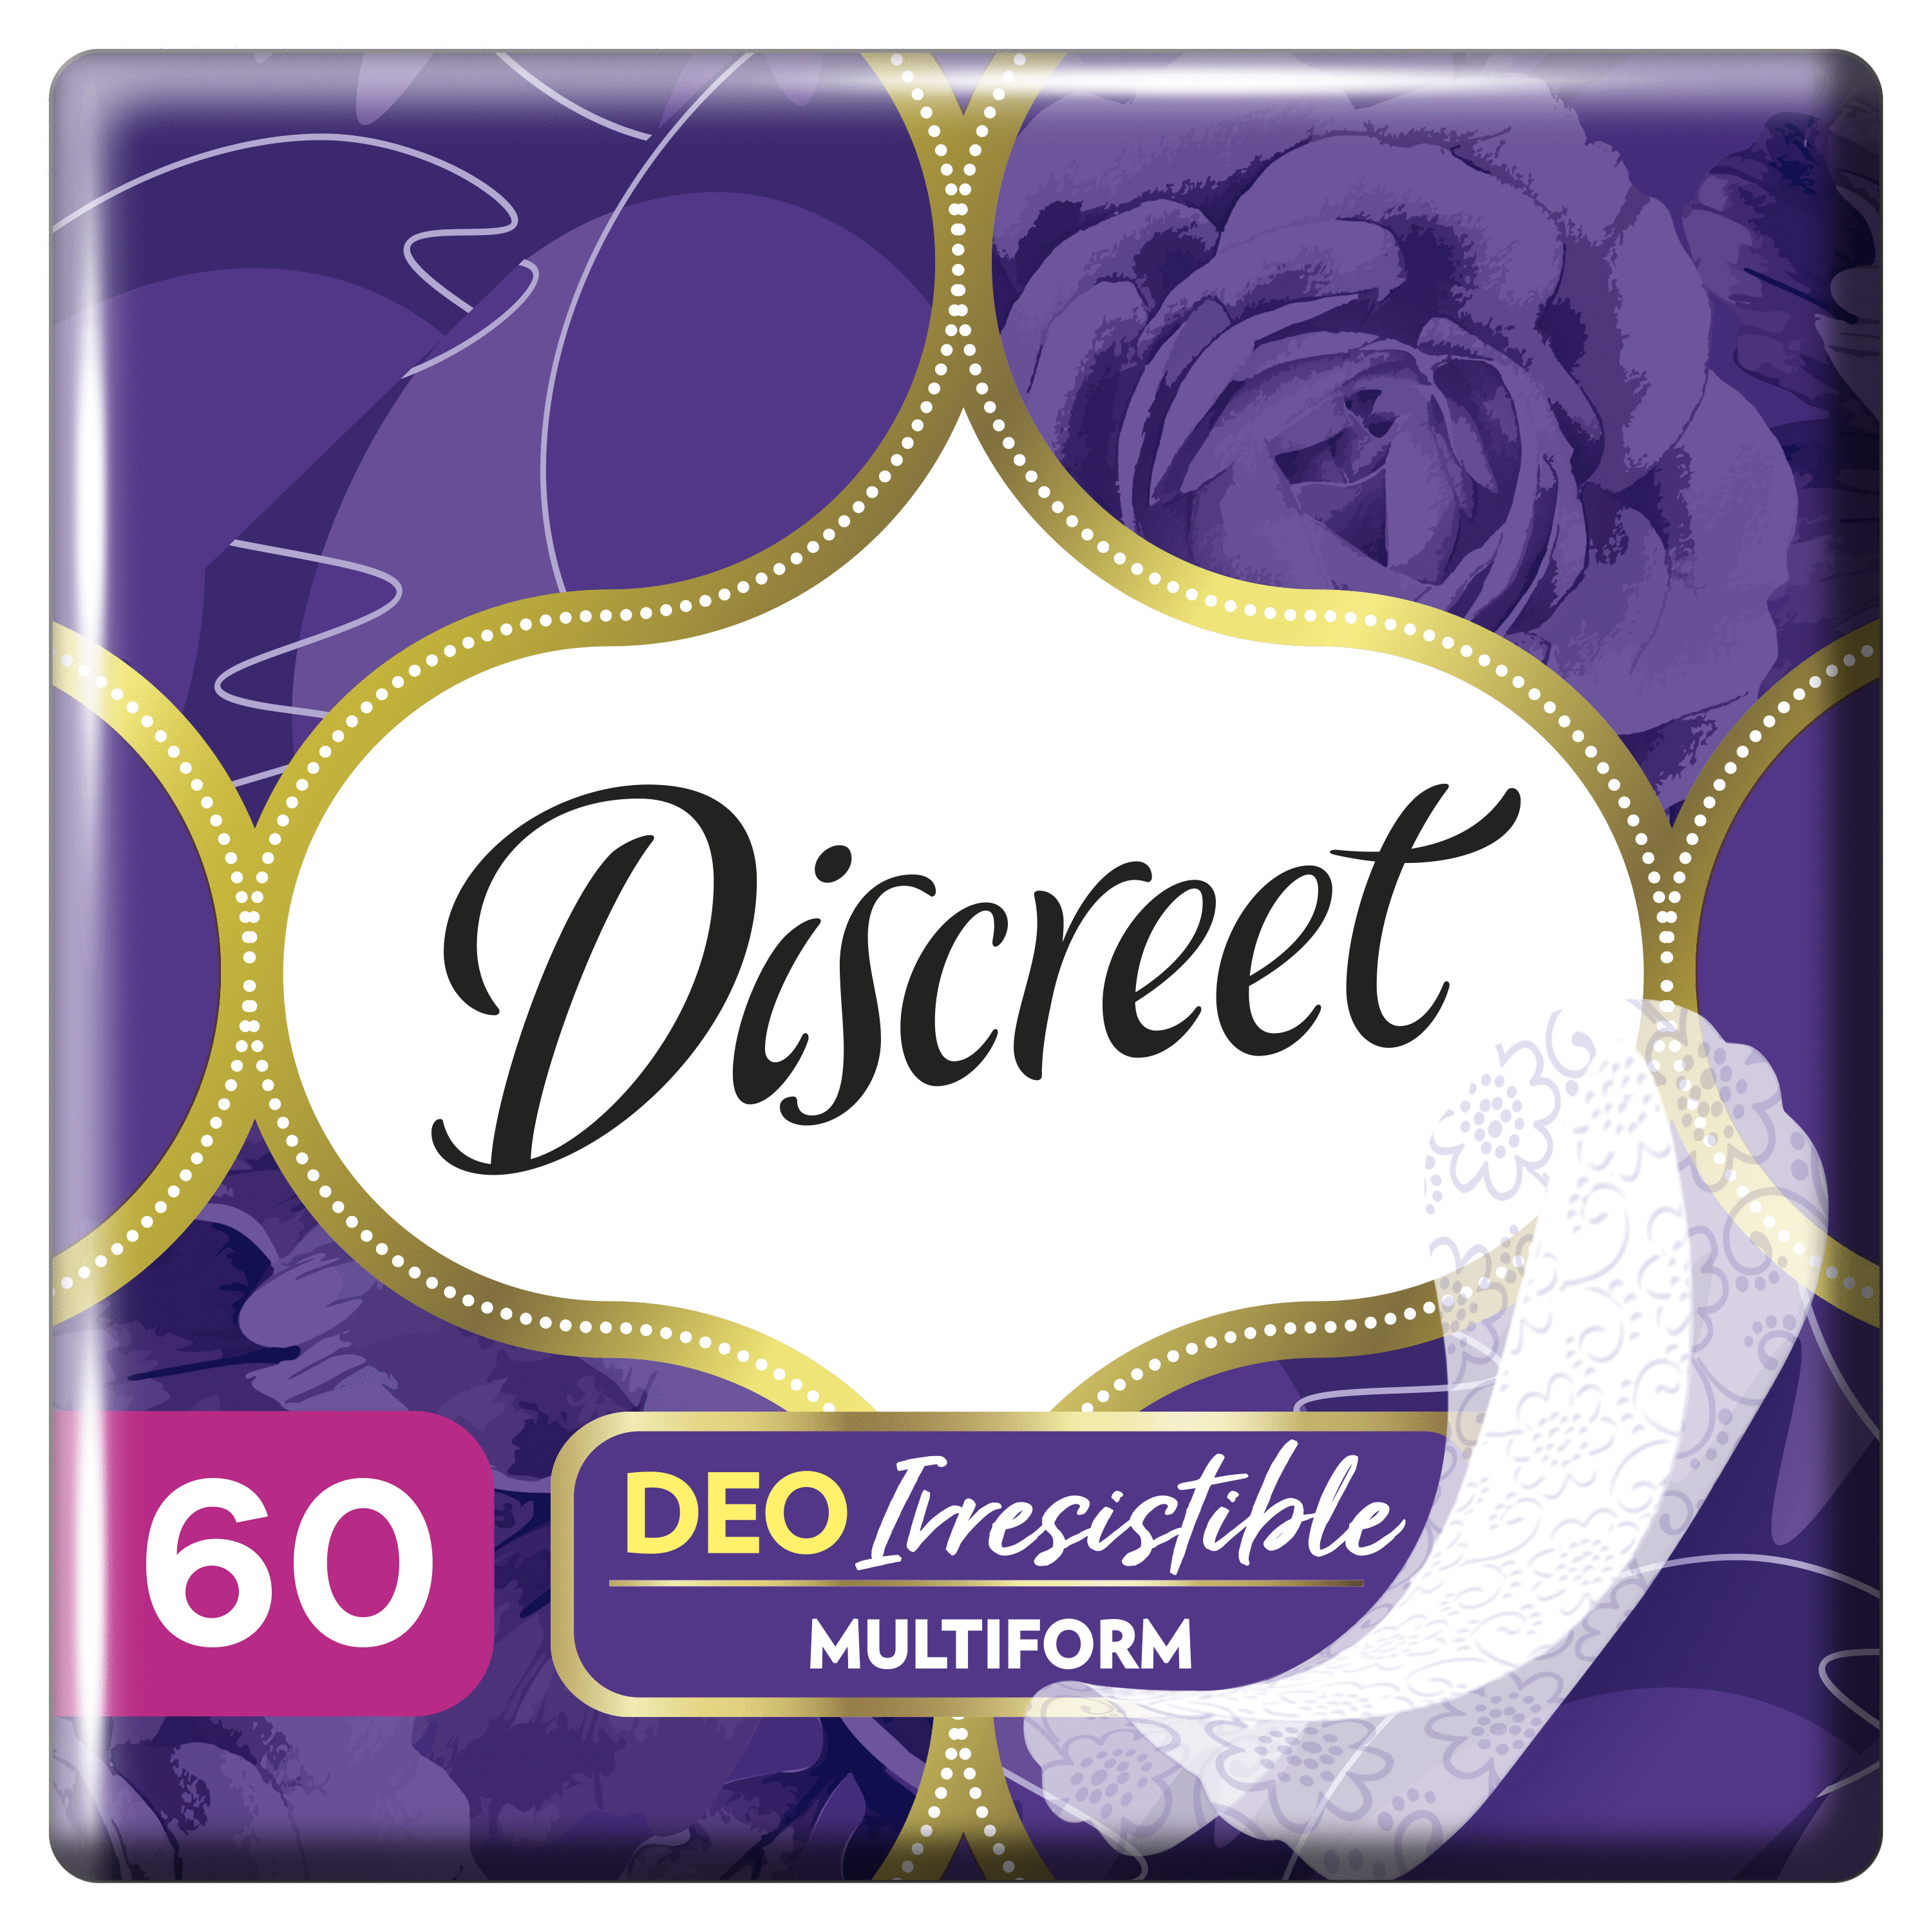 Discreet ежедневные прокладки Deo Irresistible Multiform Trio 60шт